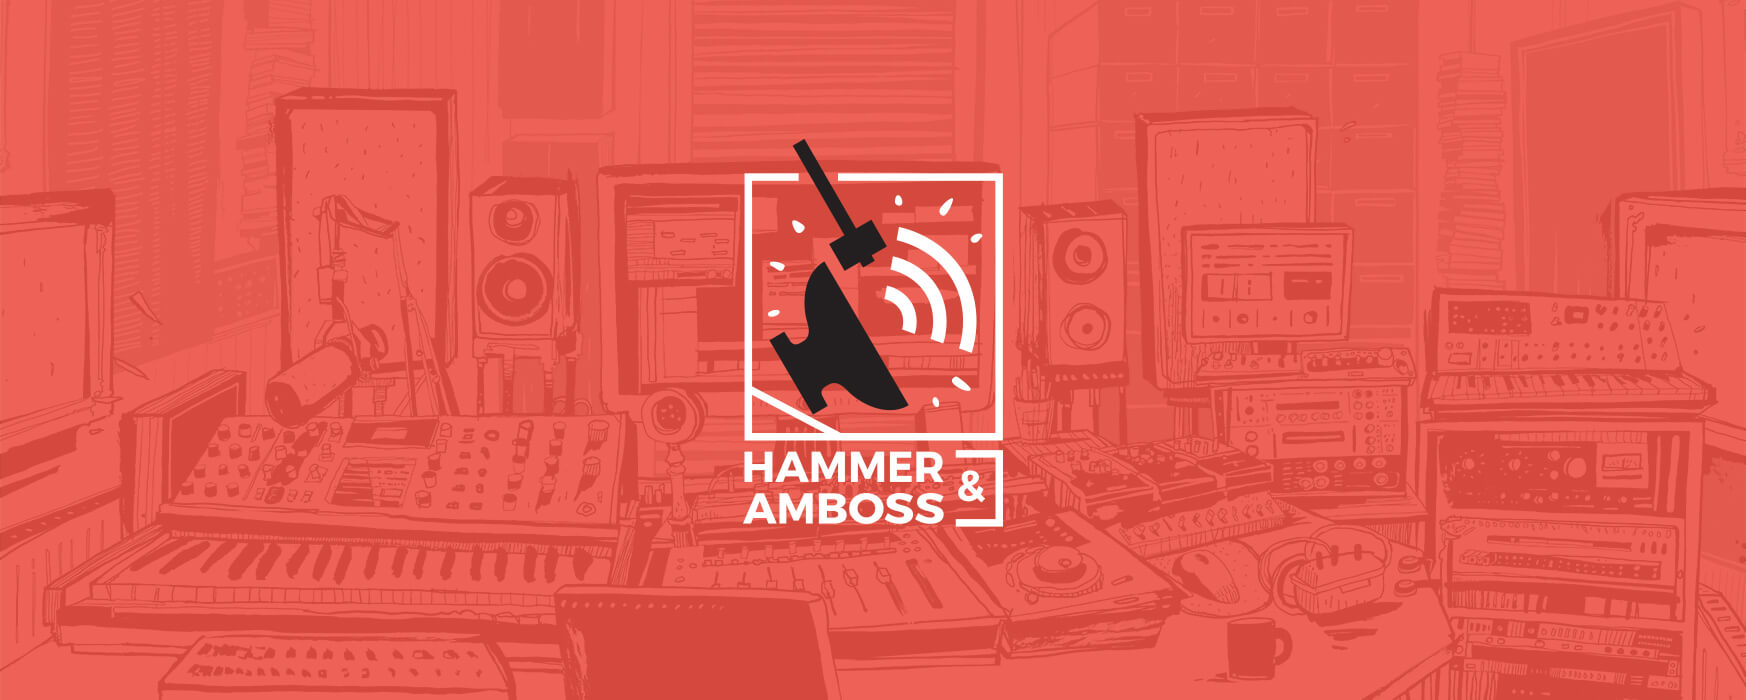 Hammer & Amboss 